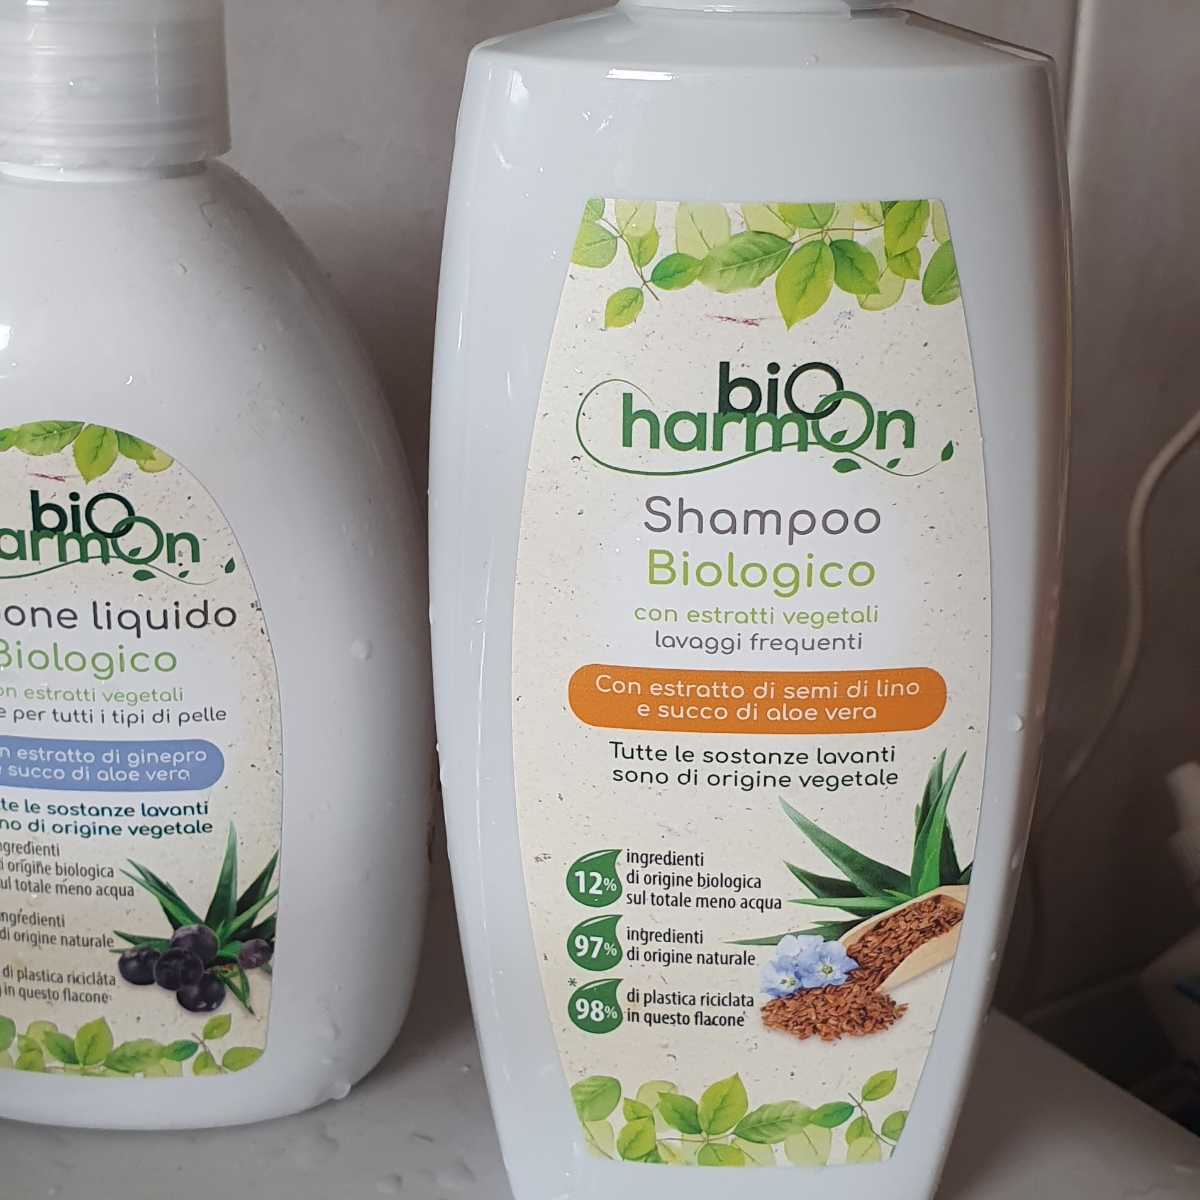 Bio harmon Shampoo biologico Review | abillion